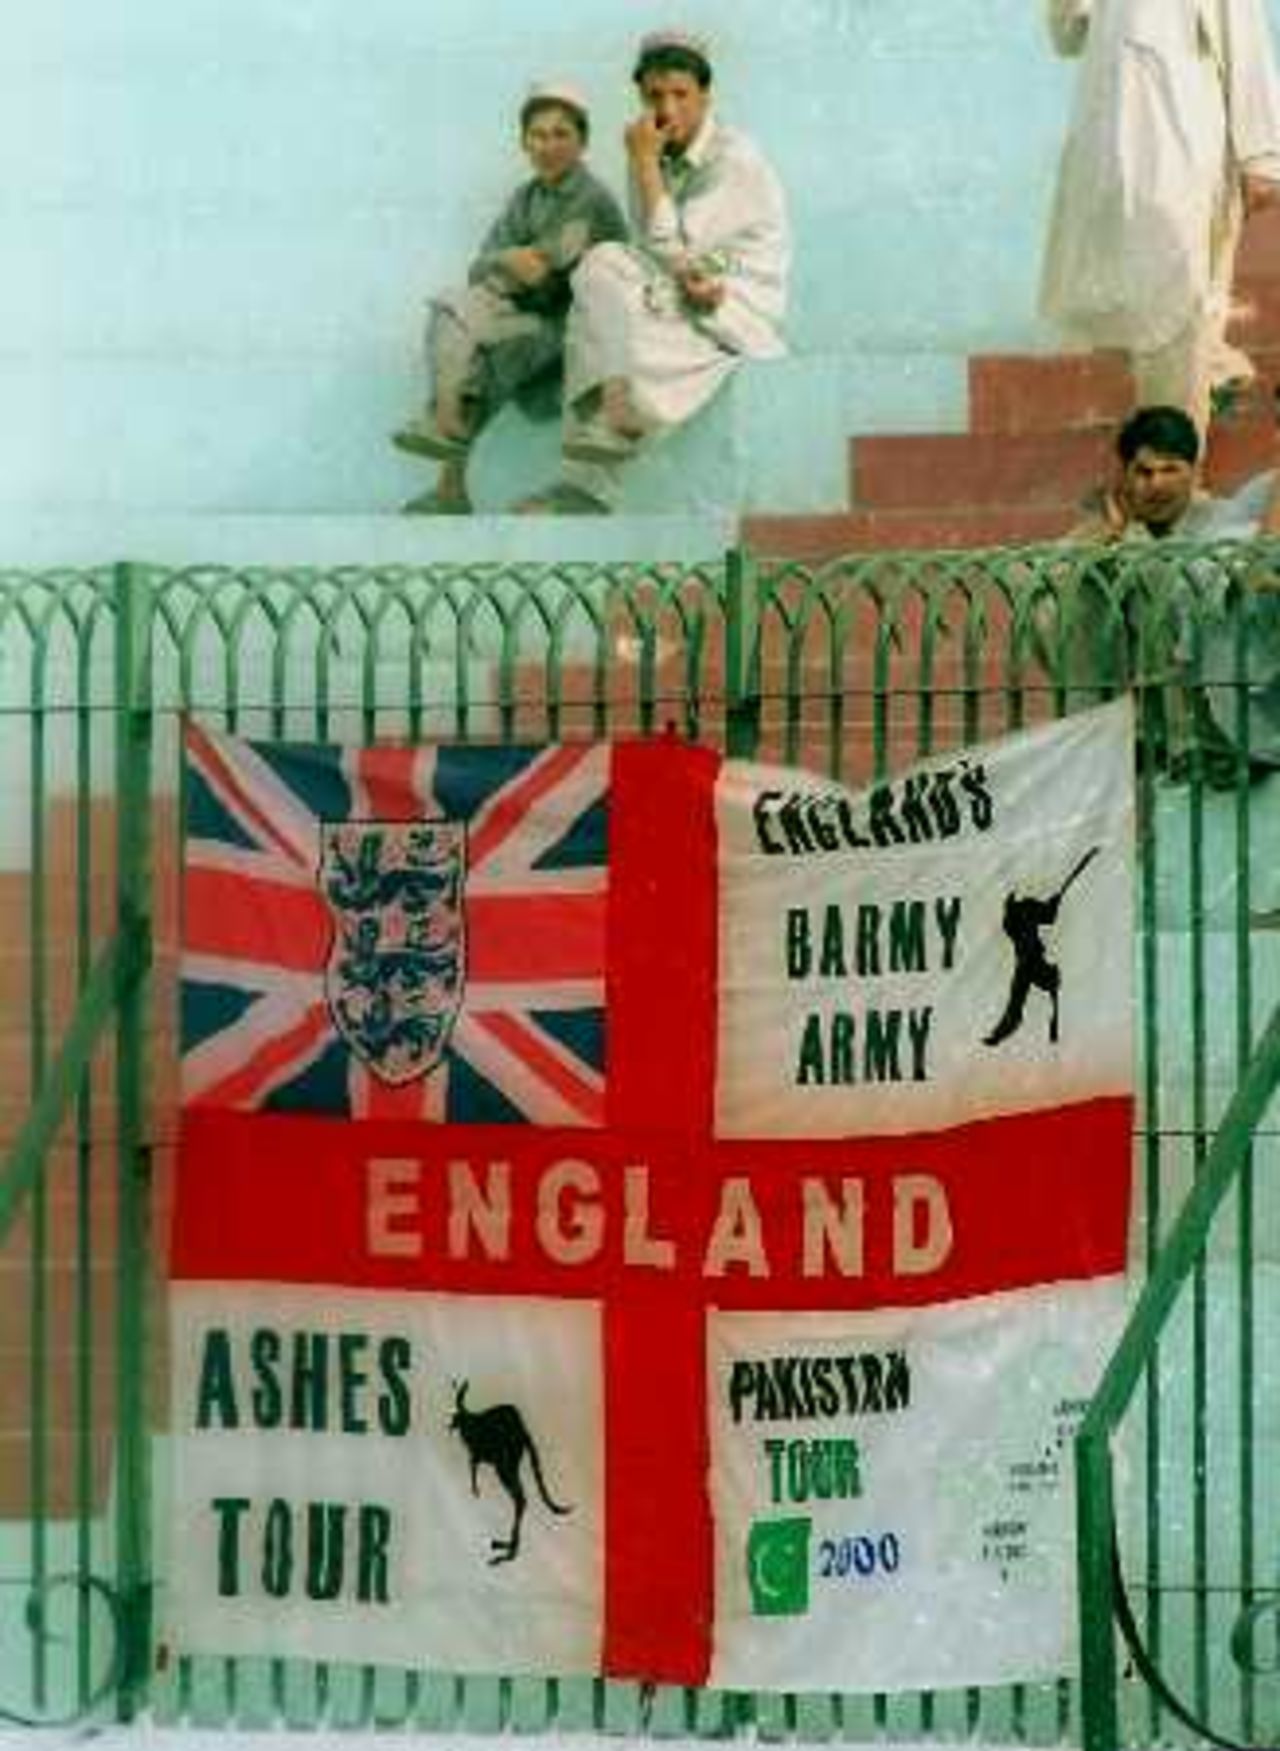 Banner advertising England's future series, Governor's XI v England XI at Peshawar, 8-11 Nov 2000